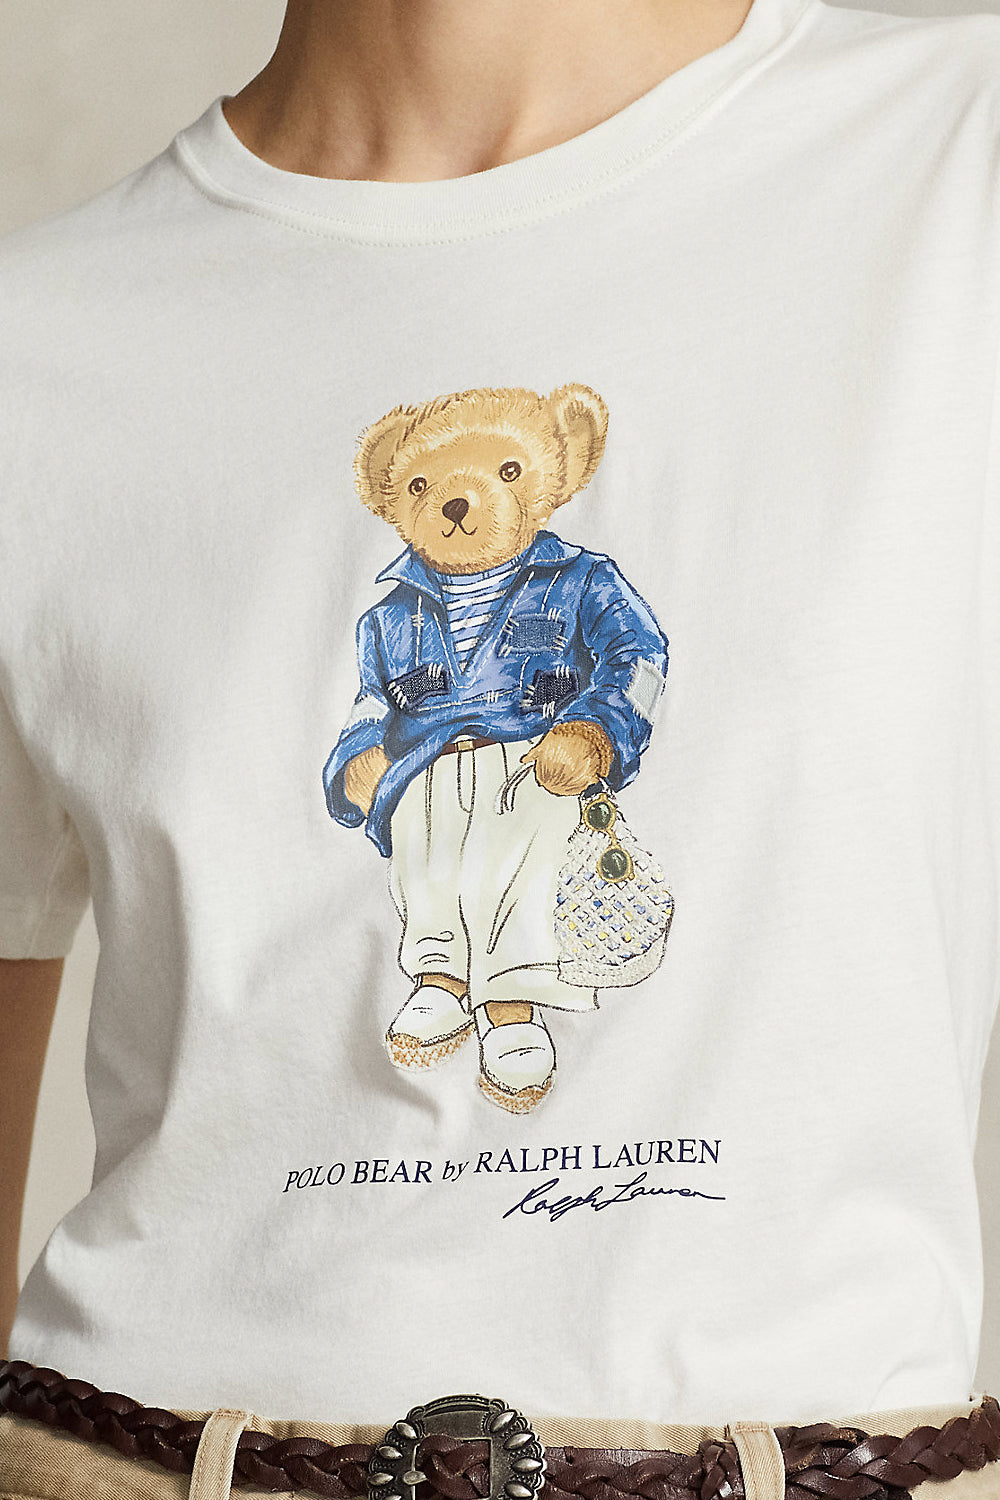 POLO RALPH LAUREN T-shirt Polo bear in jersey